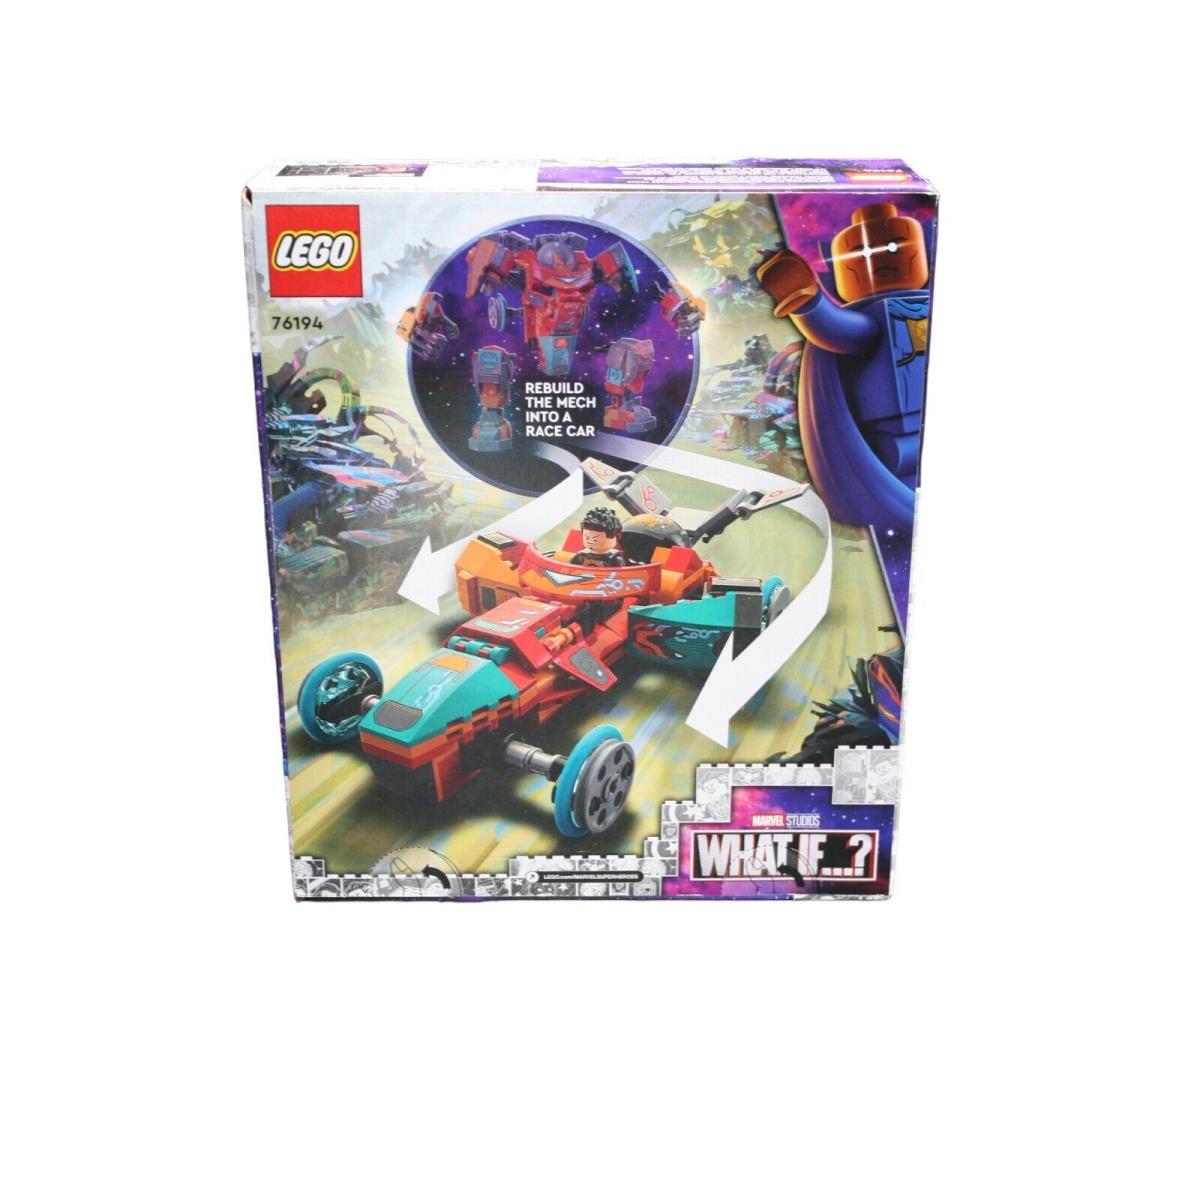 Lego Marvel Tony Stark s Sakaarian Iron Man 76194 Building Kit 369pcs